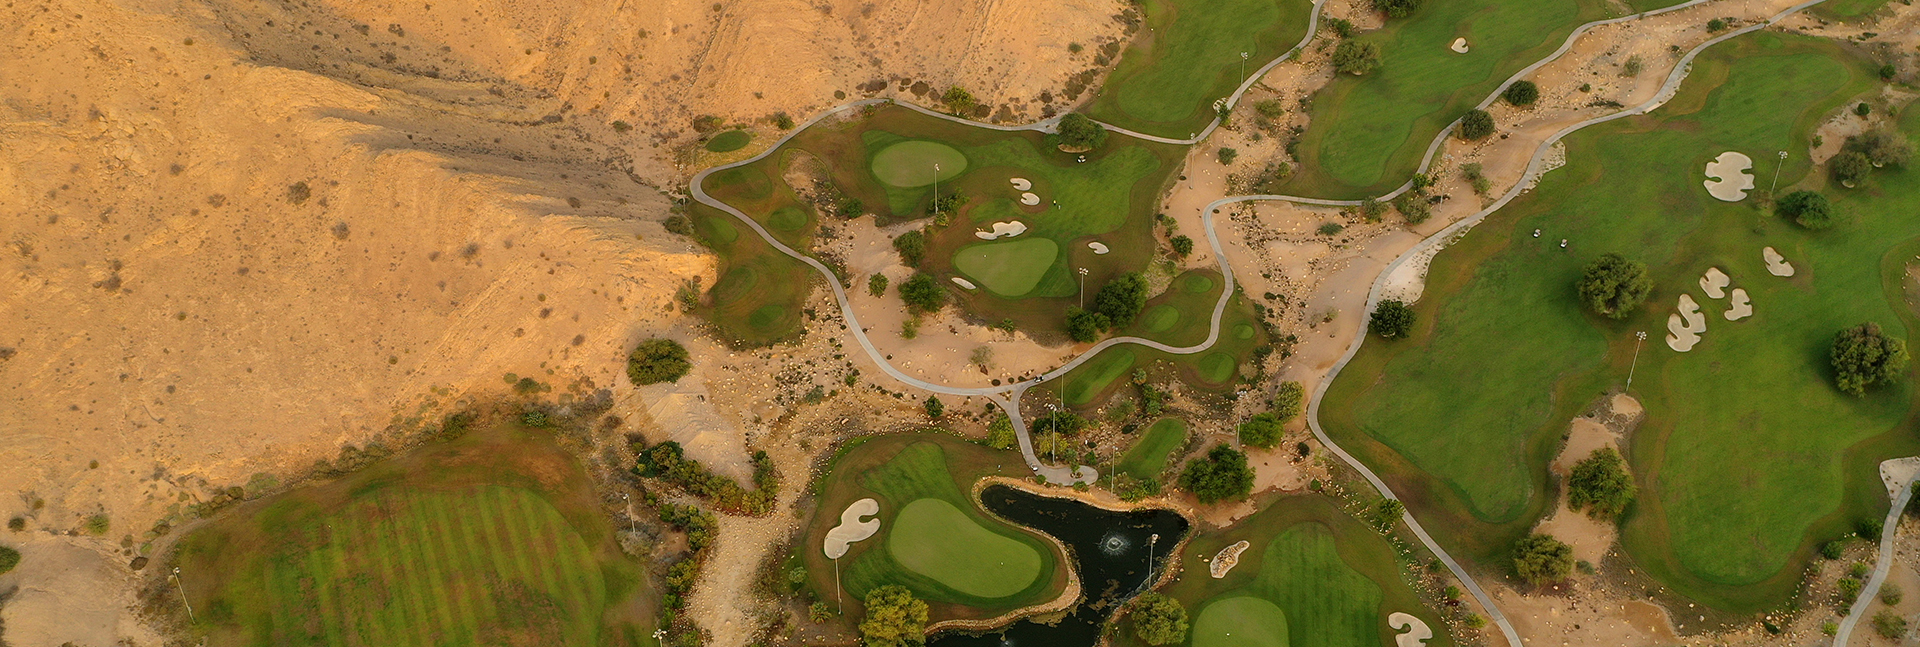 Ras al Hamra Golf Club